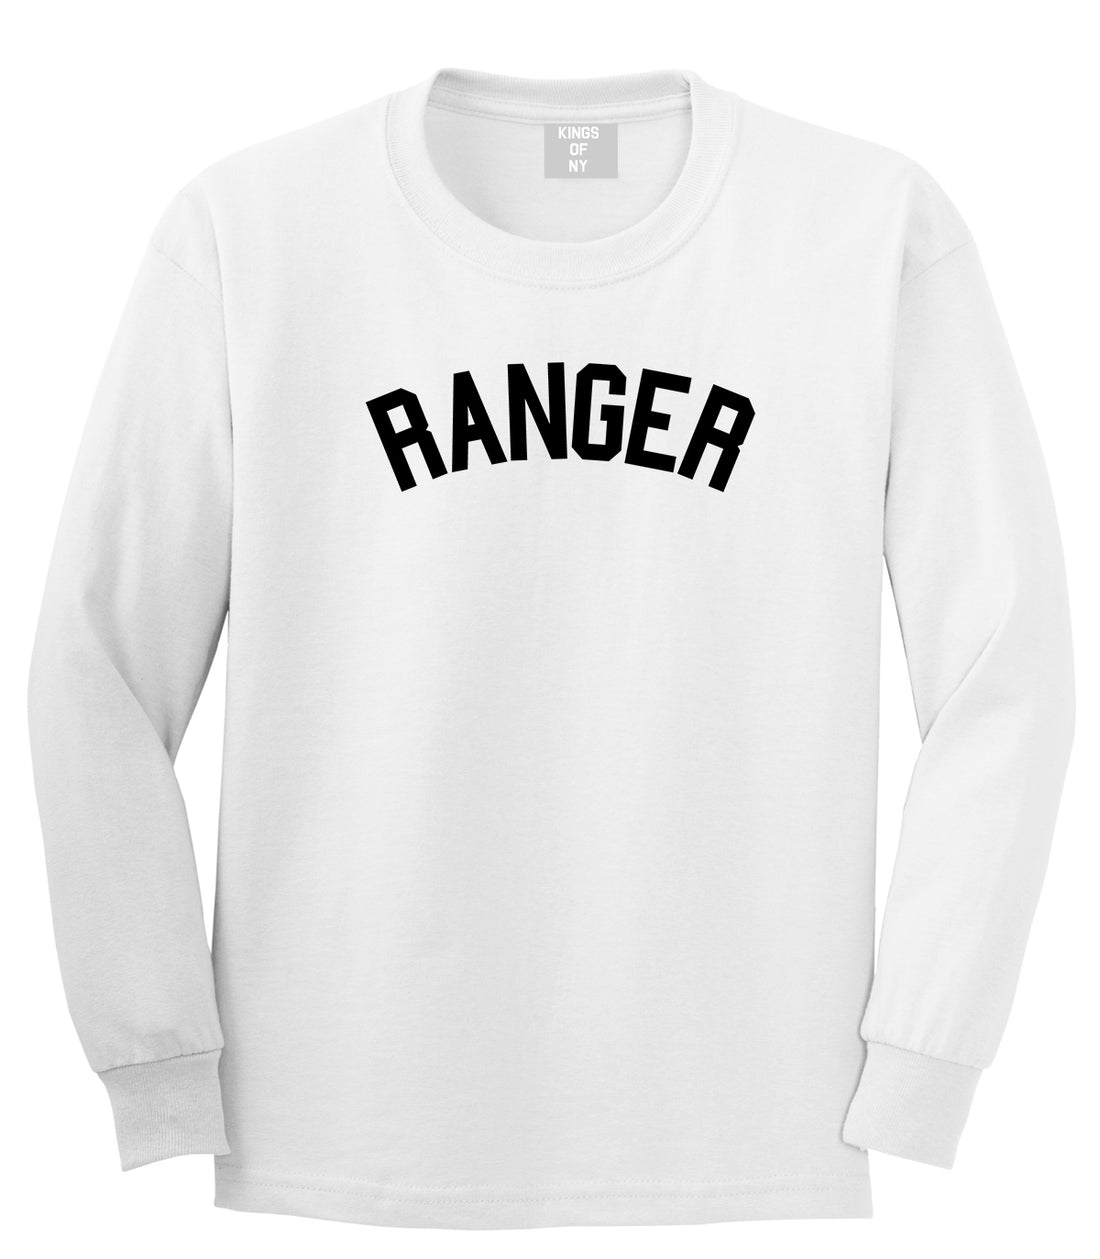 Ranger Mens White Long Sleeve T-Shirt by Kings Of NY